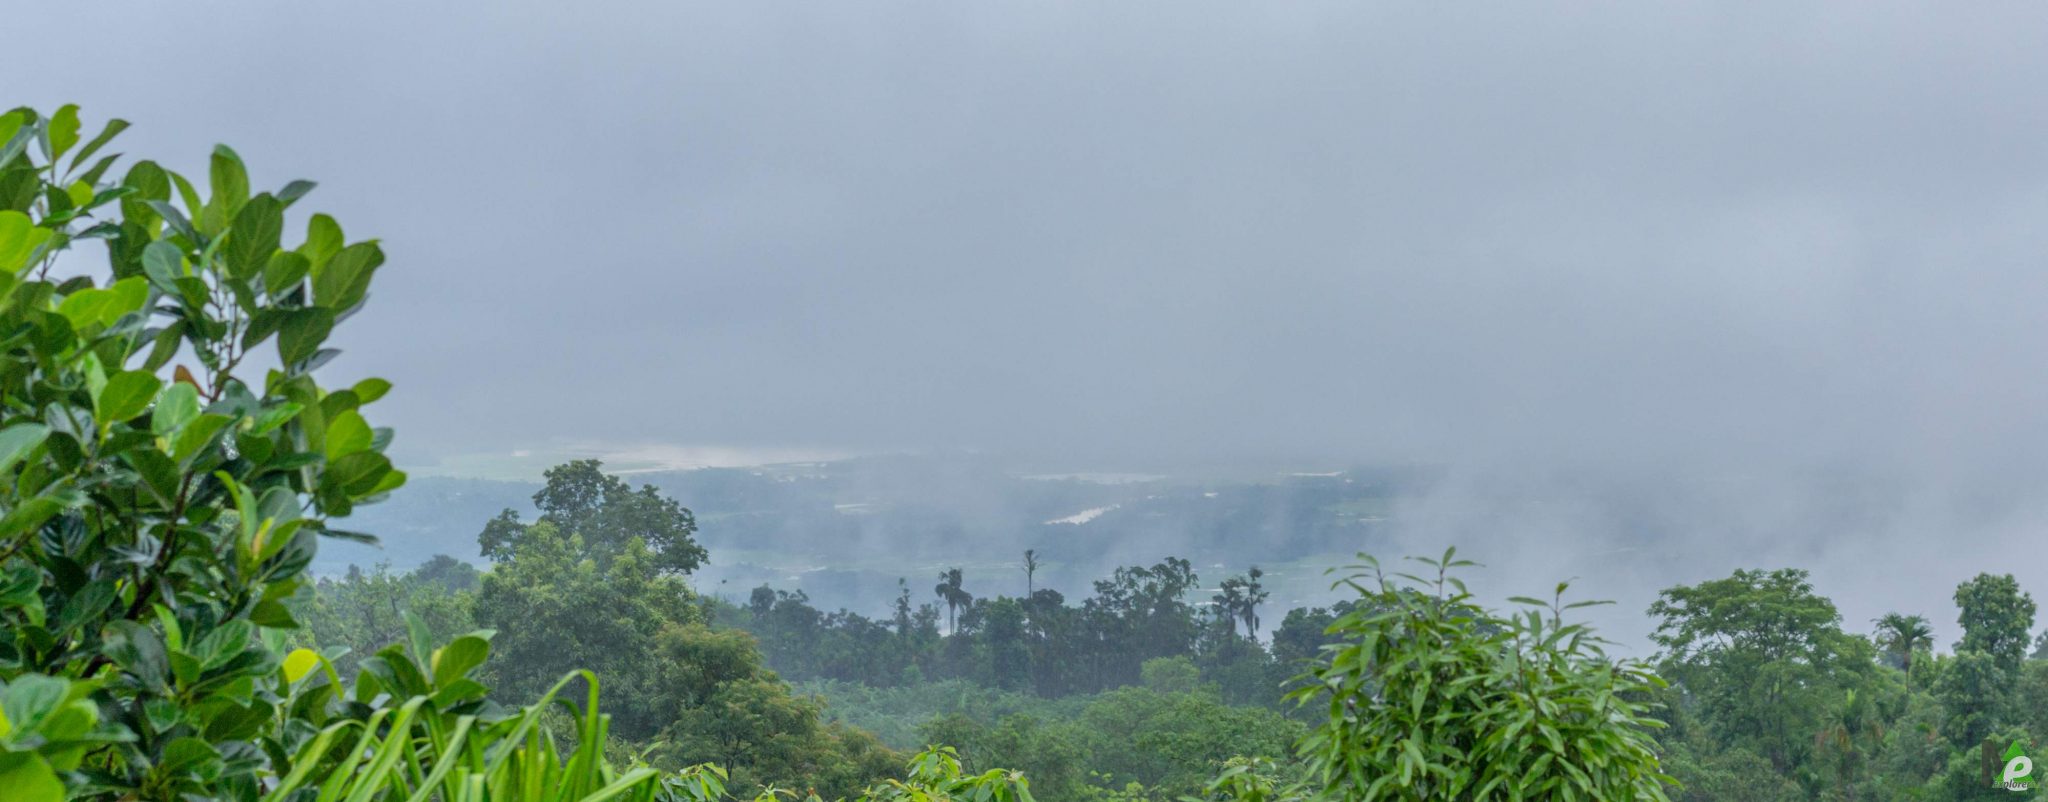 Bangladesh view From Mawlynnong